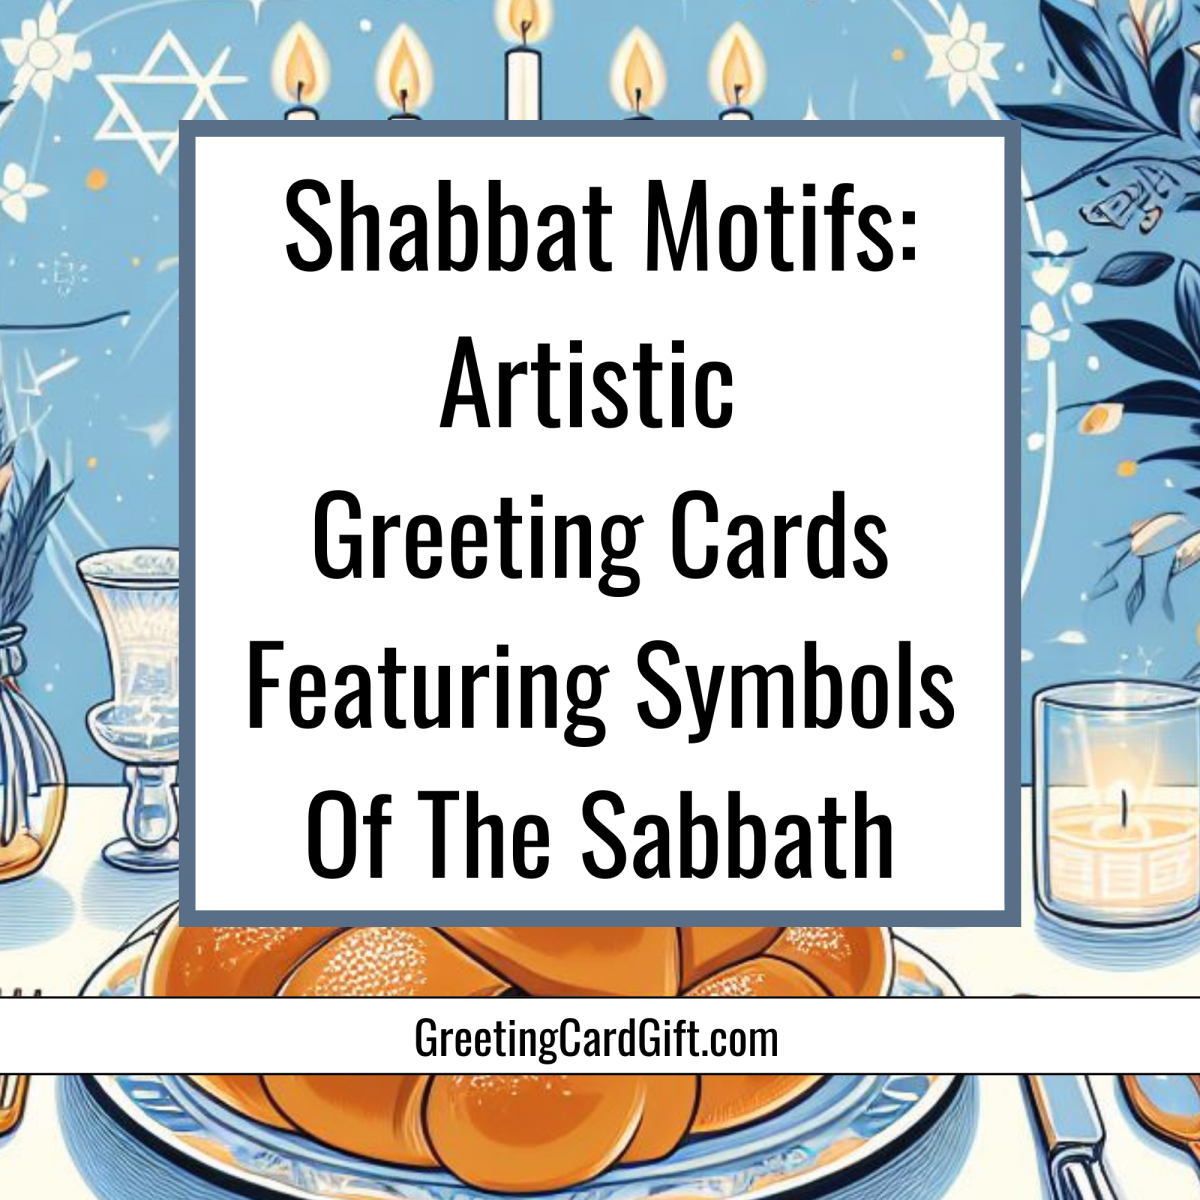 Shabbat Motifs: Artistic Greeting Cards Featuring Symbols Of The Sabbath